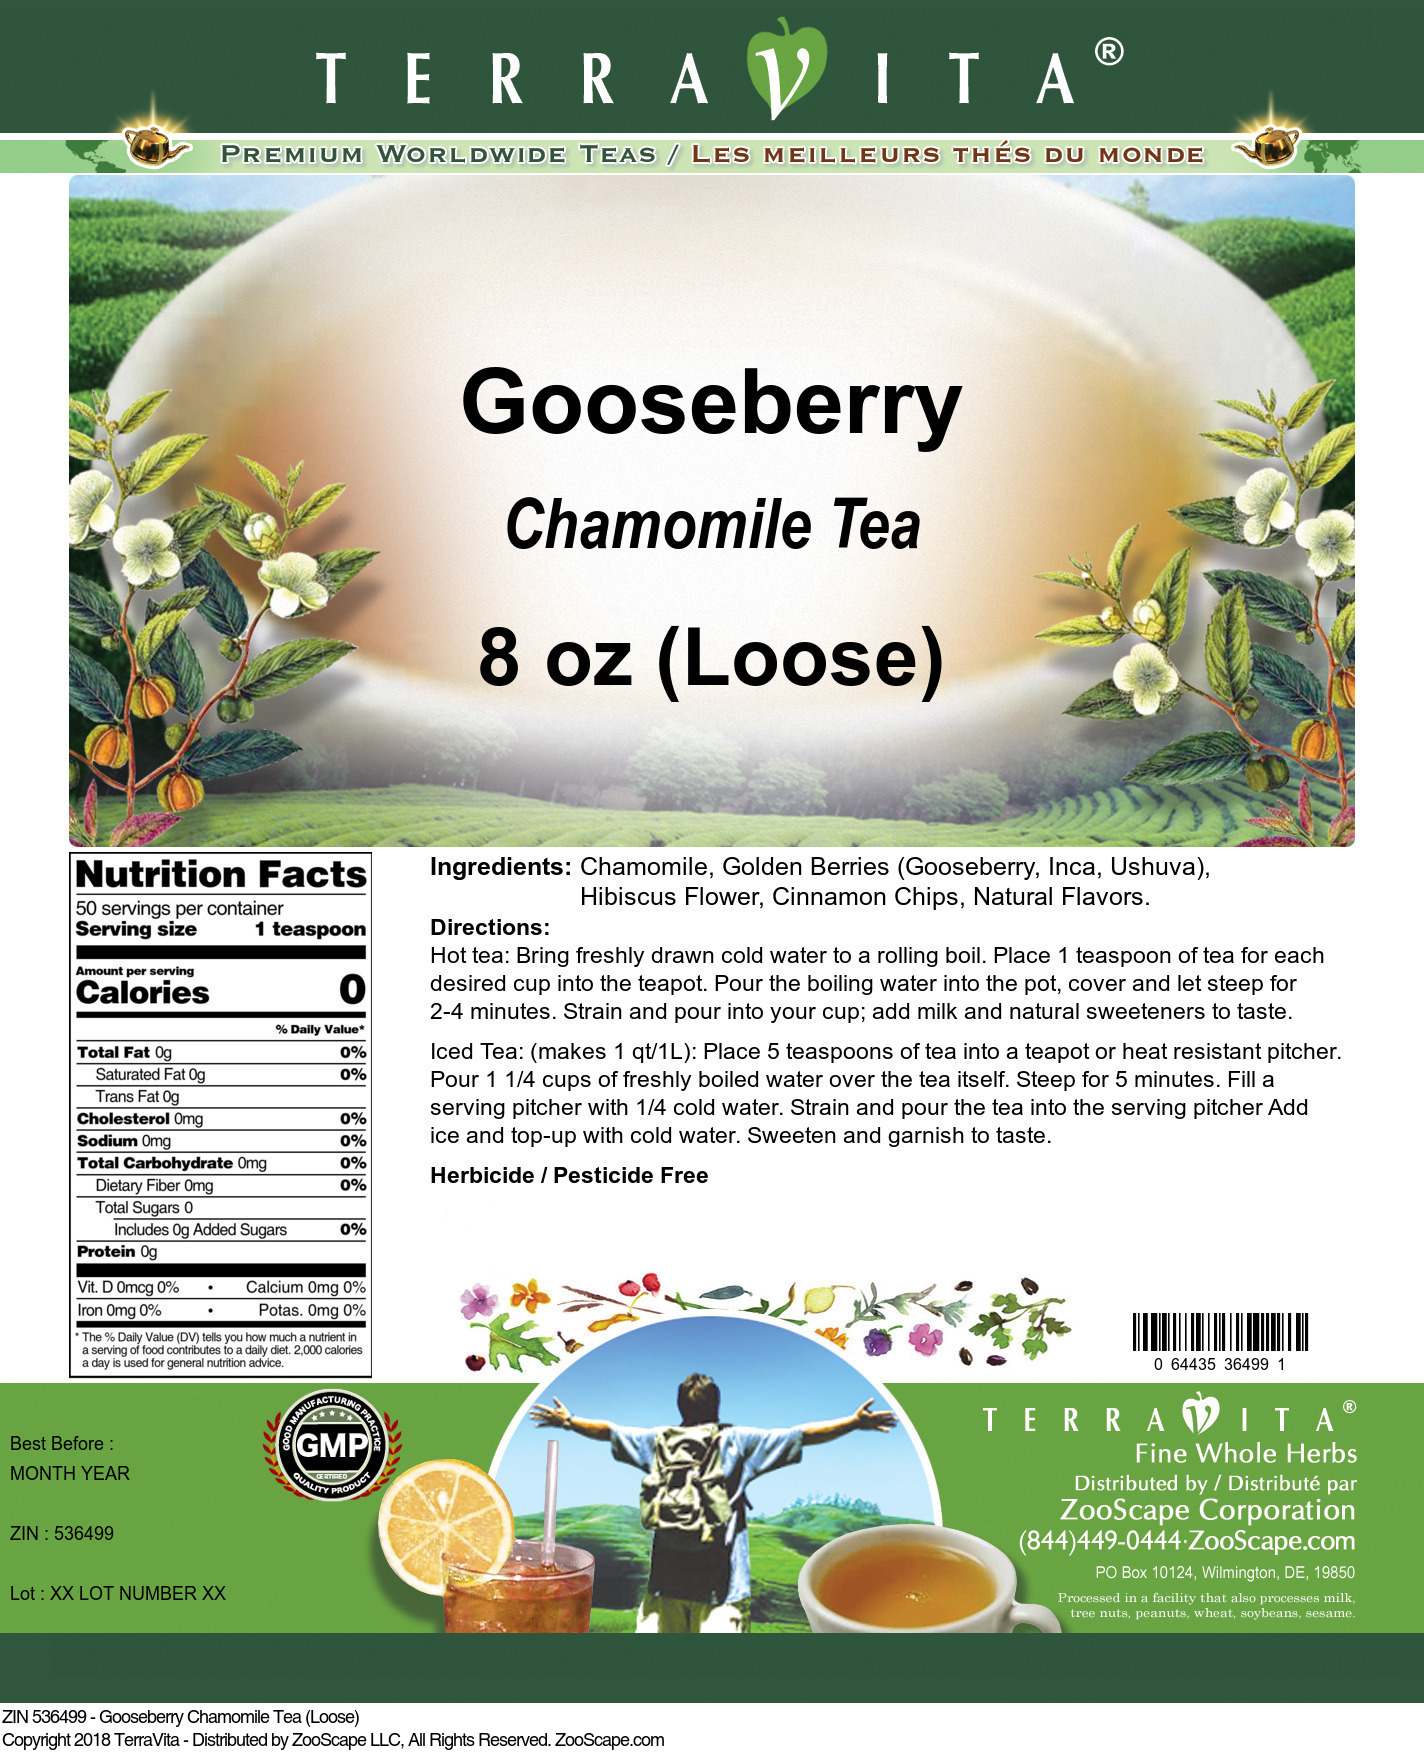 Gooseberry Chamomile Tea (Loose) - Label